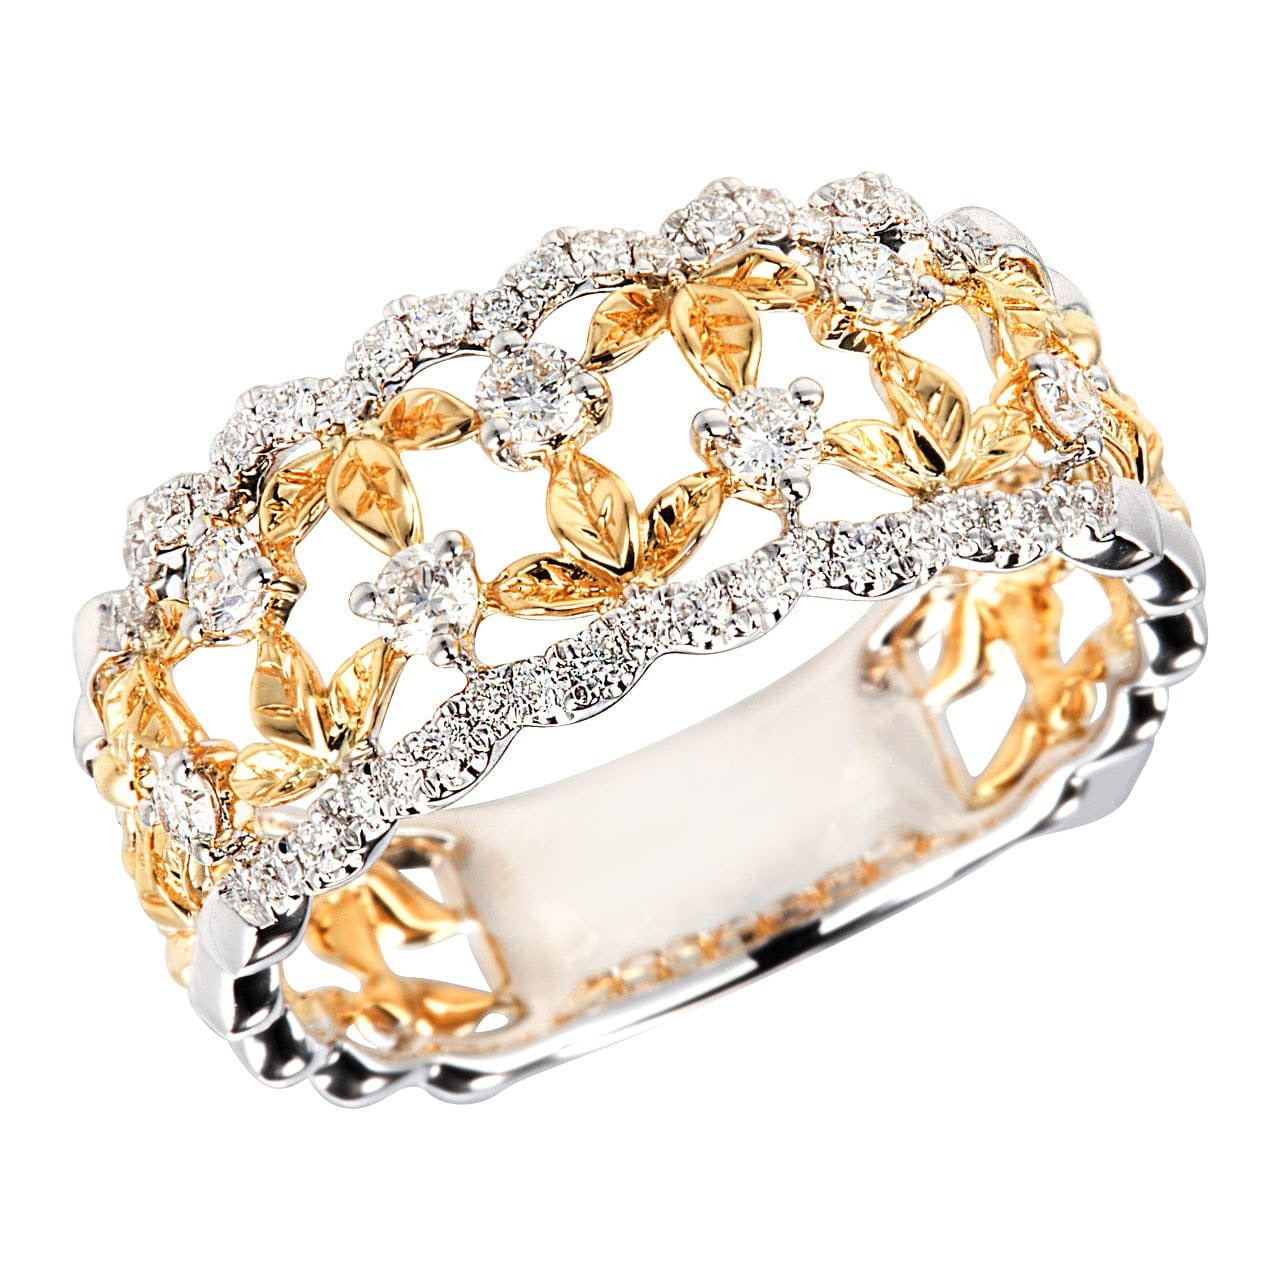 Popular Design Luxury Gift 18K 750 White Yellow Gold Genuine Diamond Ring